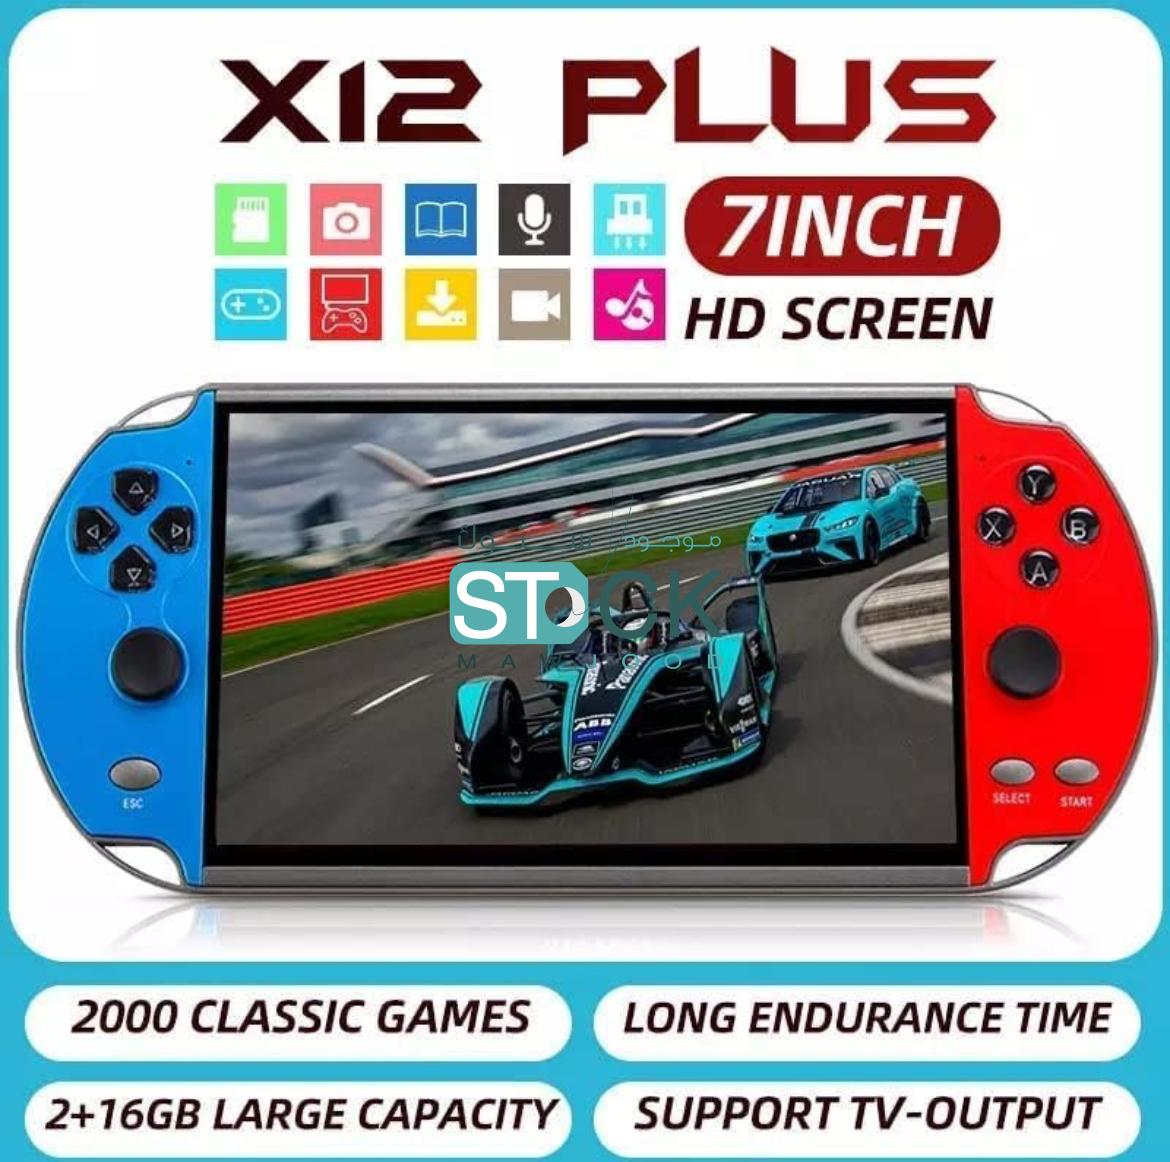 X12 Plus Handheld Game Console